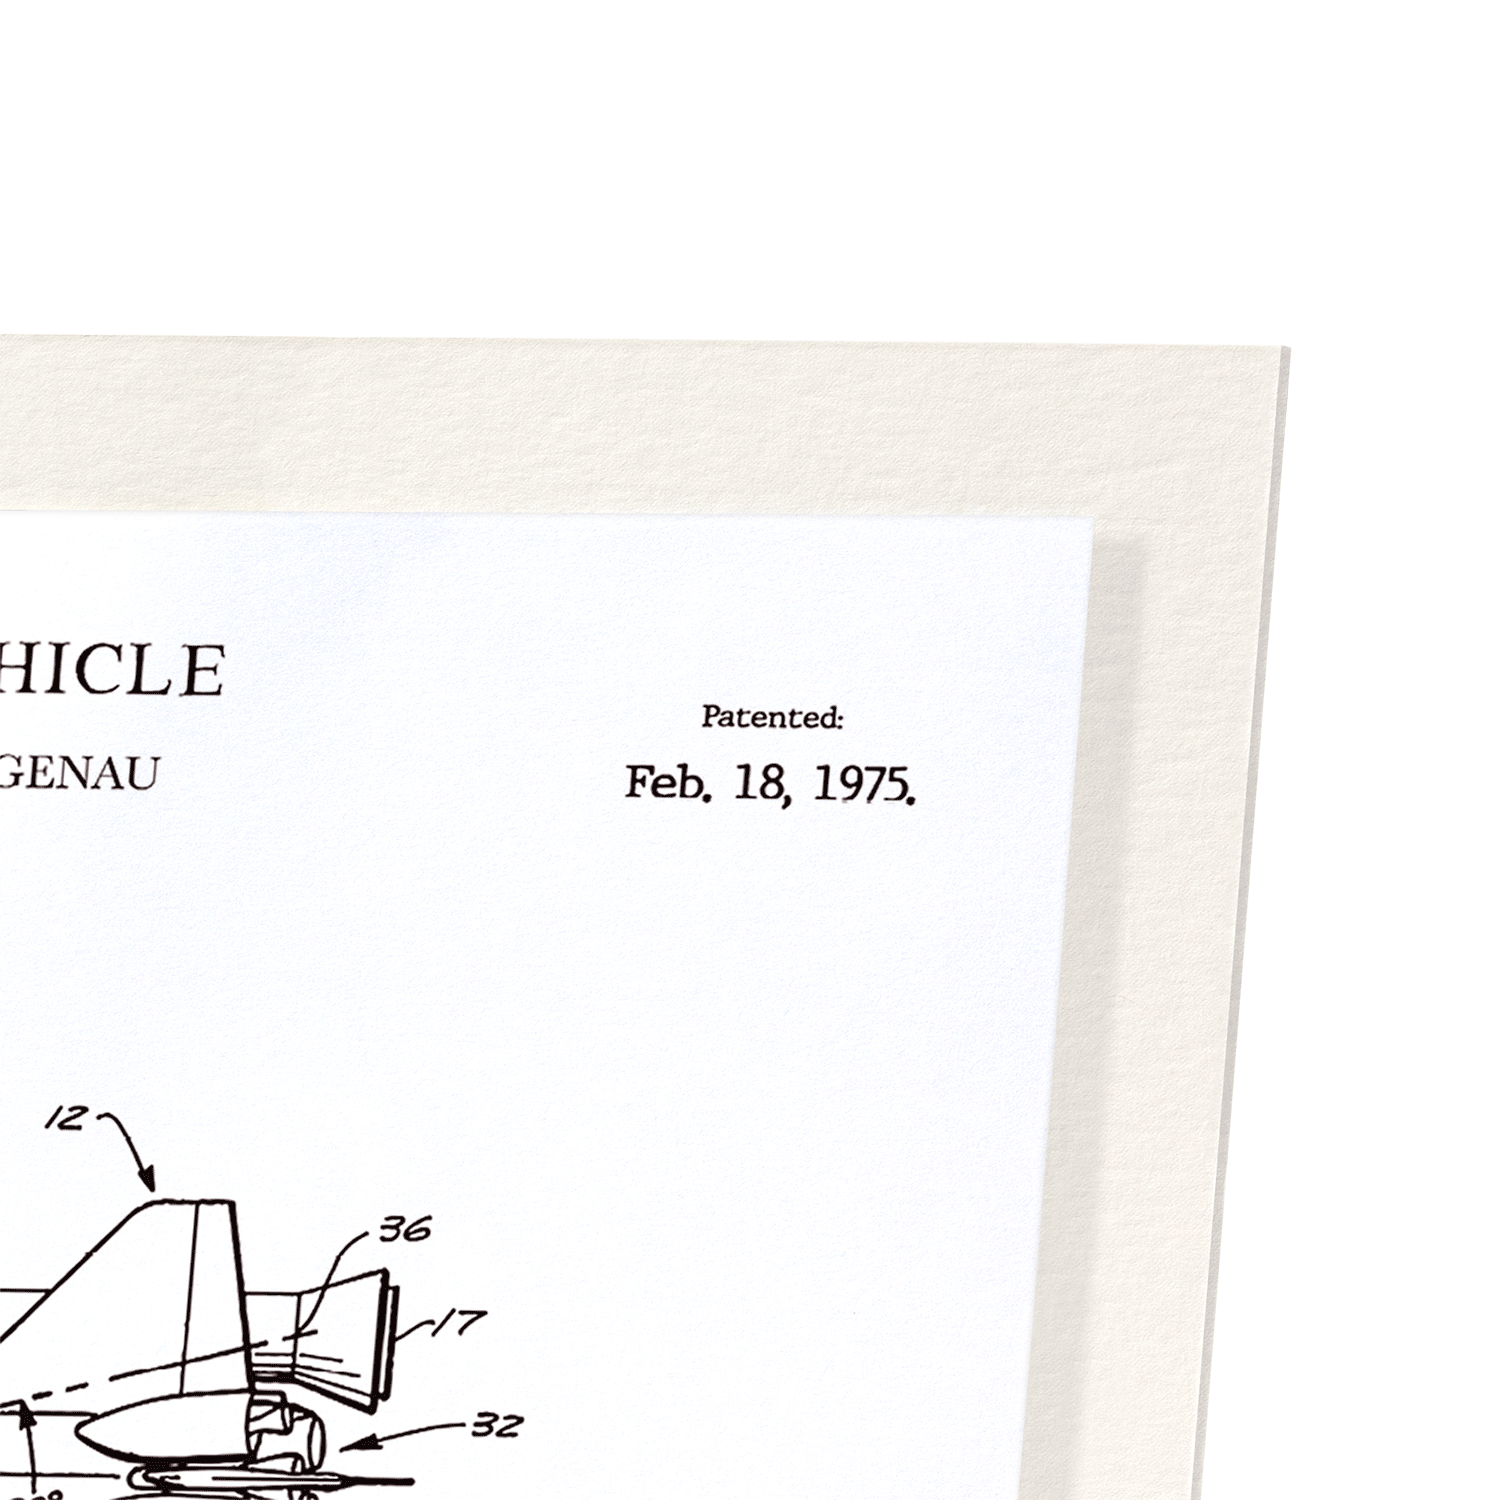 PATENT OF SPACE VEHICLE (1975): Patent Art Print